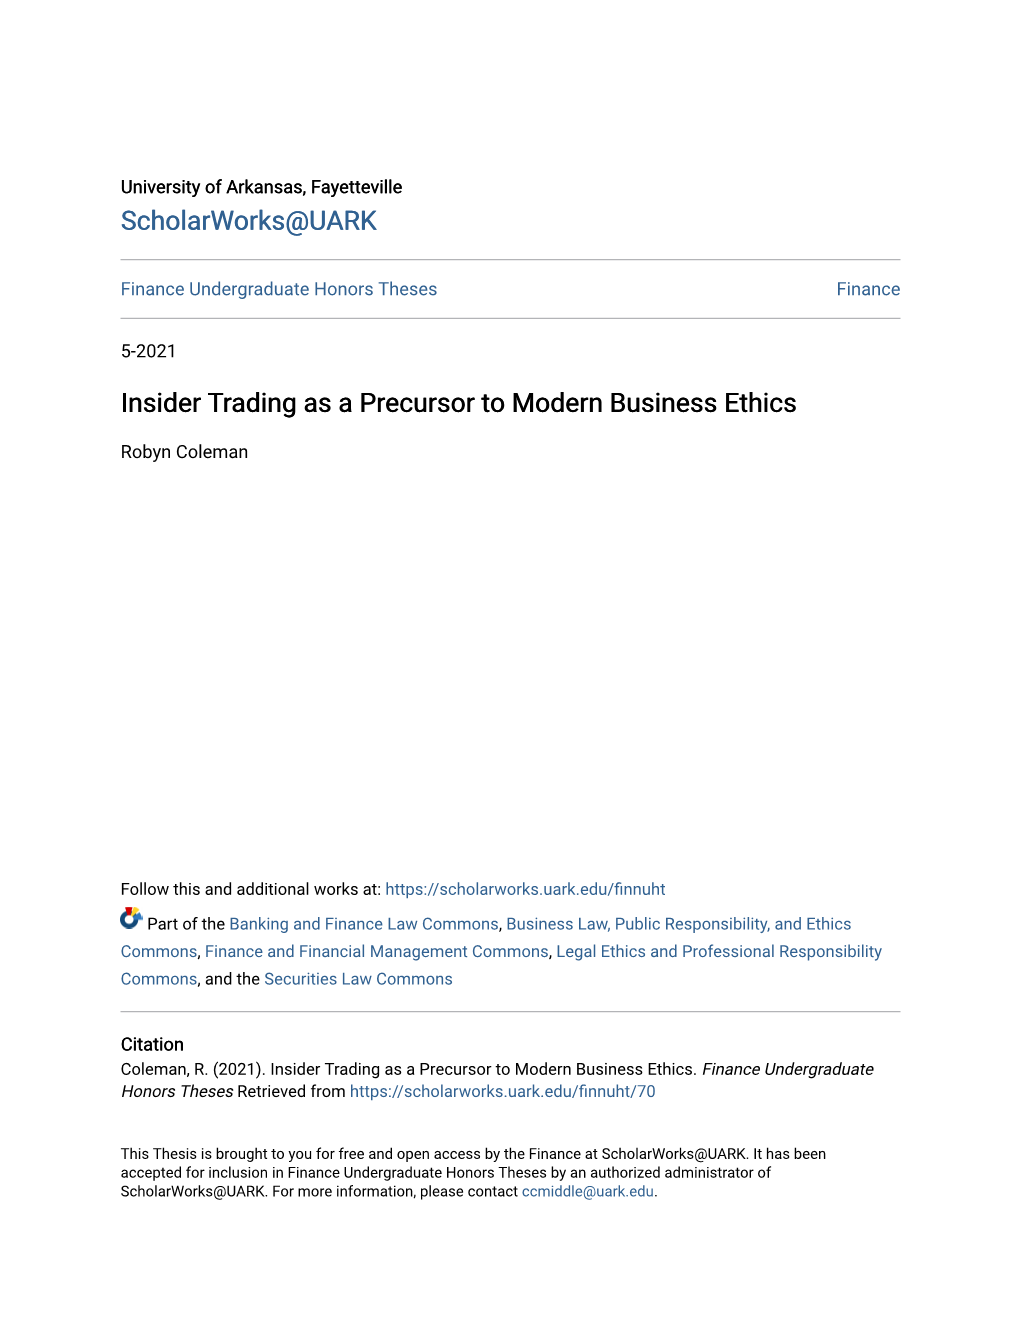 Insider Trading As a Precursor to Modern Business Ethics